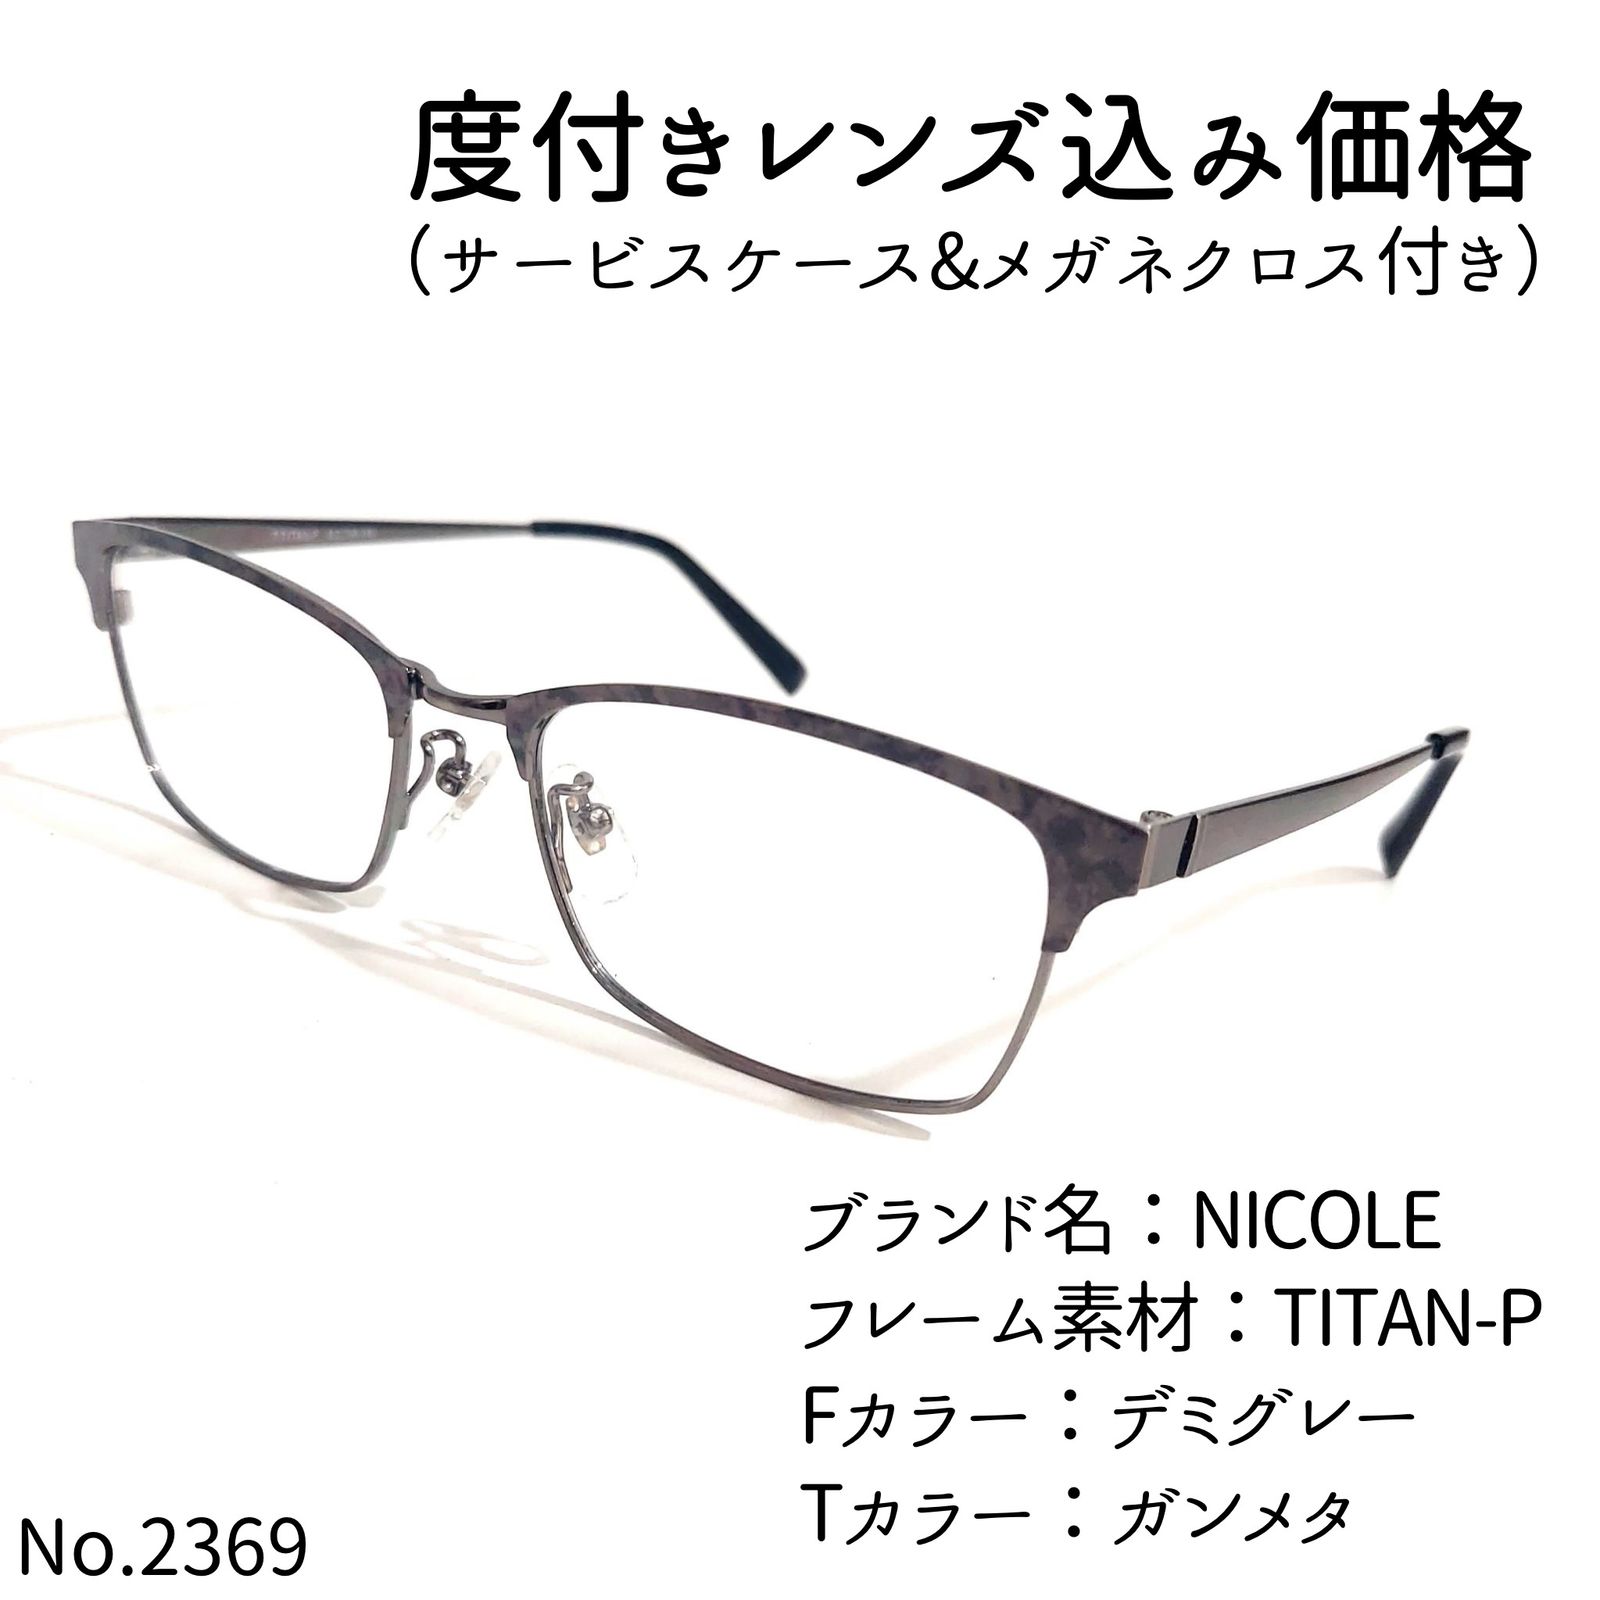 No.2369-メガネ NICOLE【フレームのみ価格】-